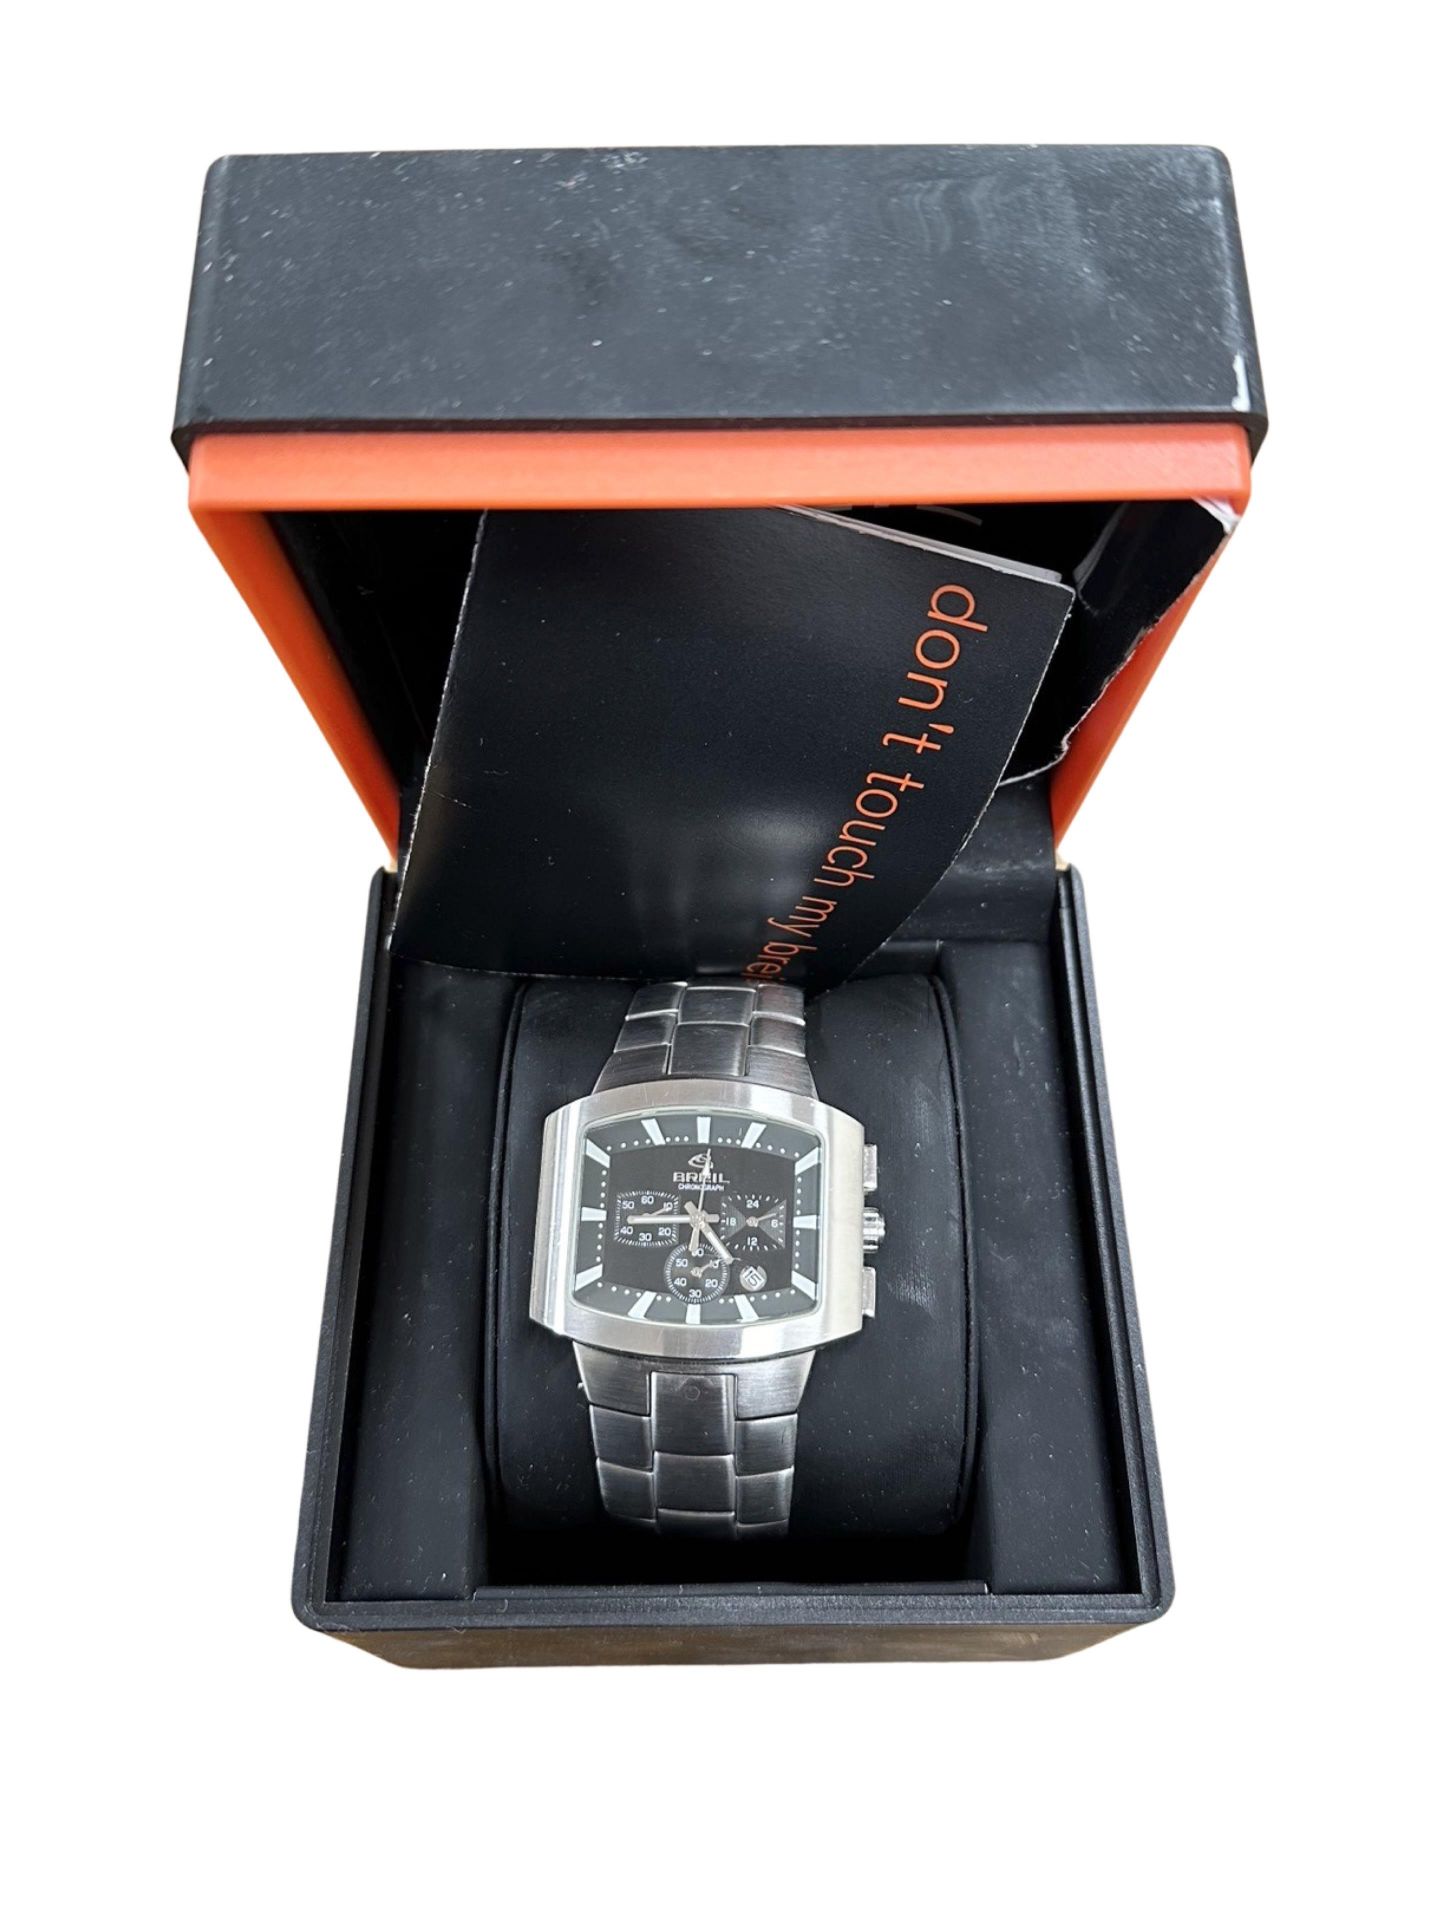 A gentlemen's Briel wristwatch, in retail box.